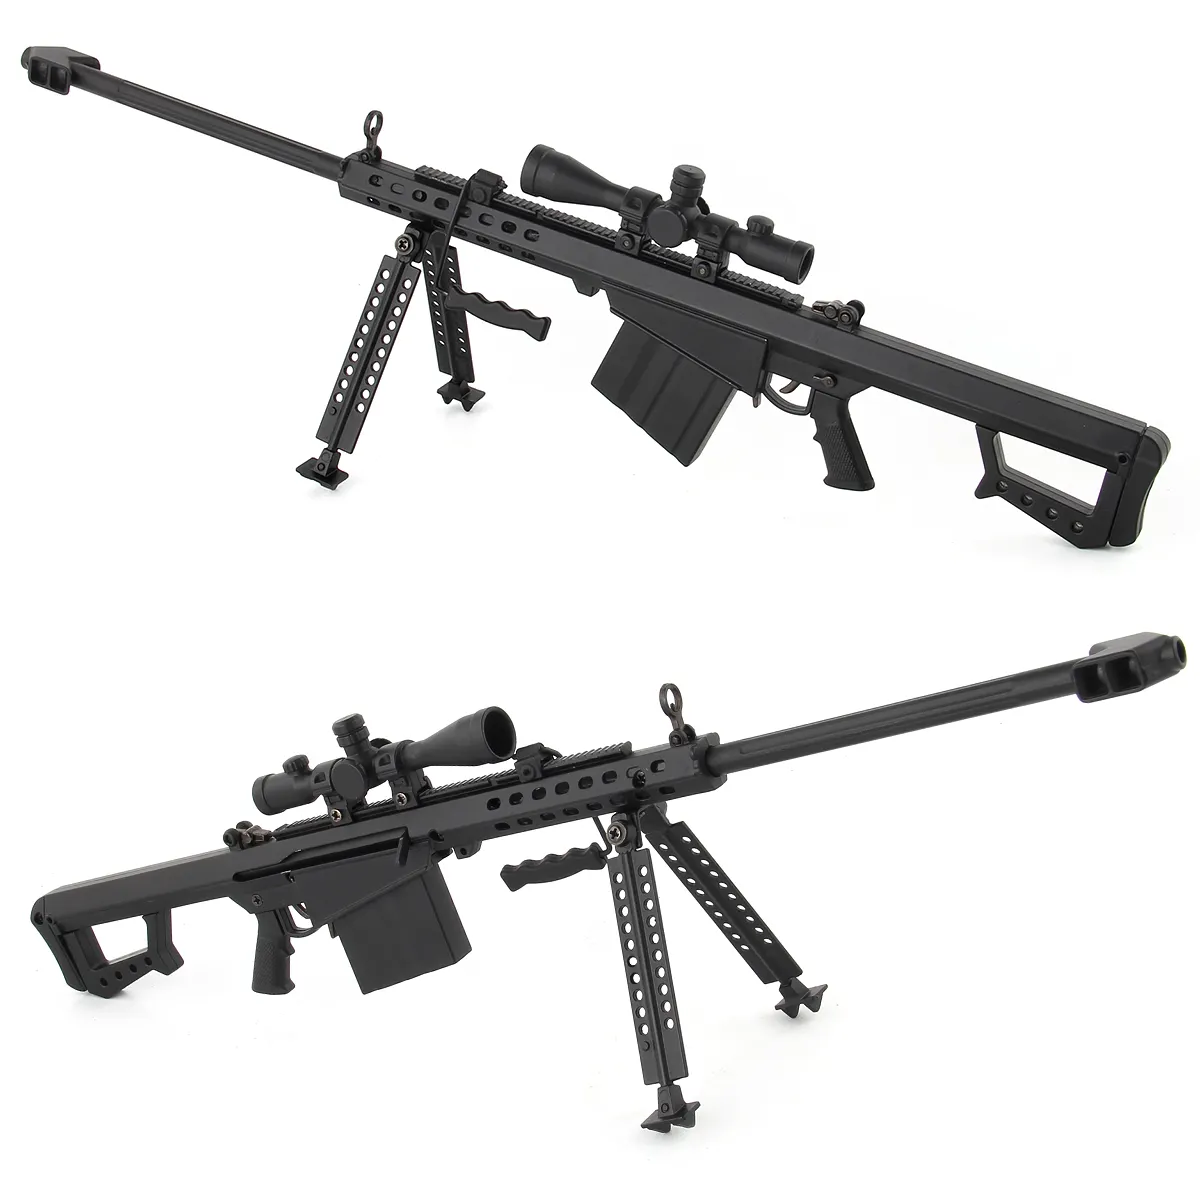 मिनी धातु हथियार बंदूक मॉडल मिश्र धातु बंदूक खिलौने बारेट स्निपर राइफल AK47 खिलौना बंदूक